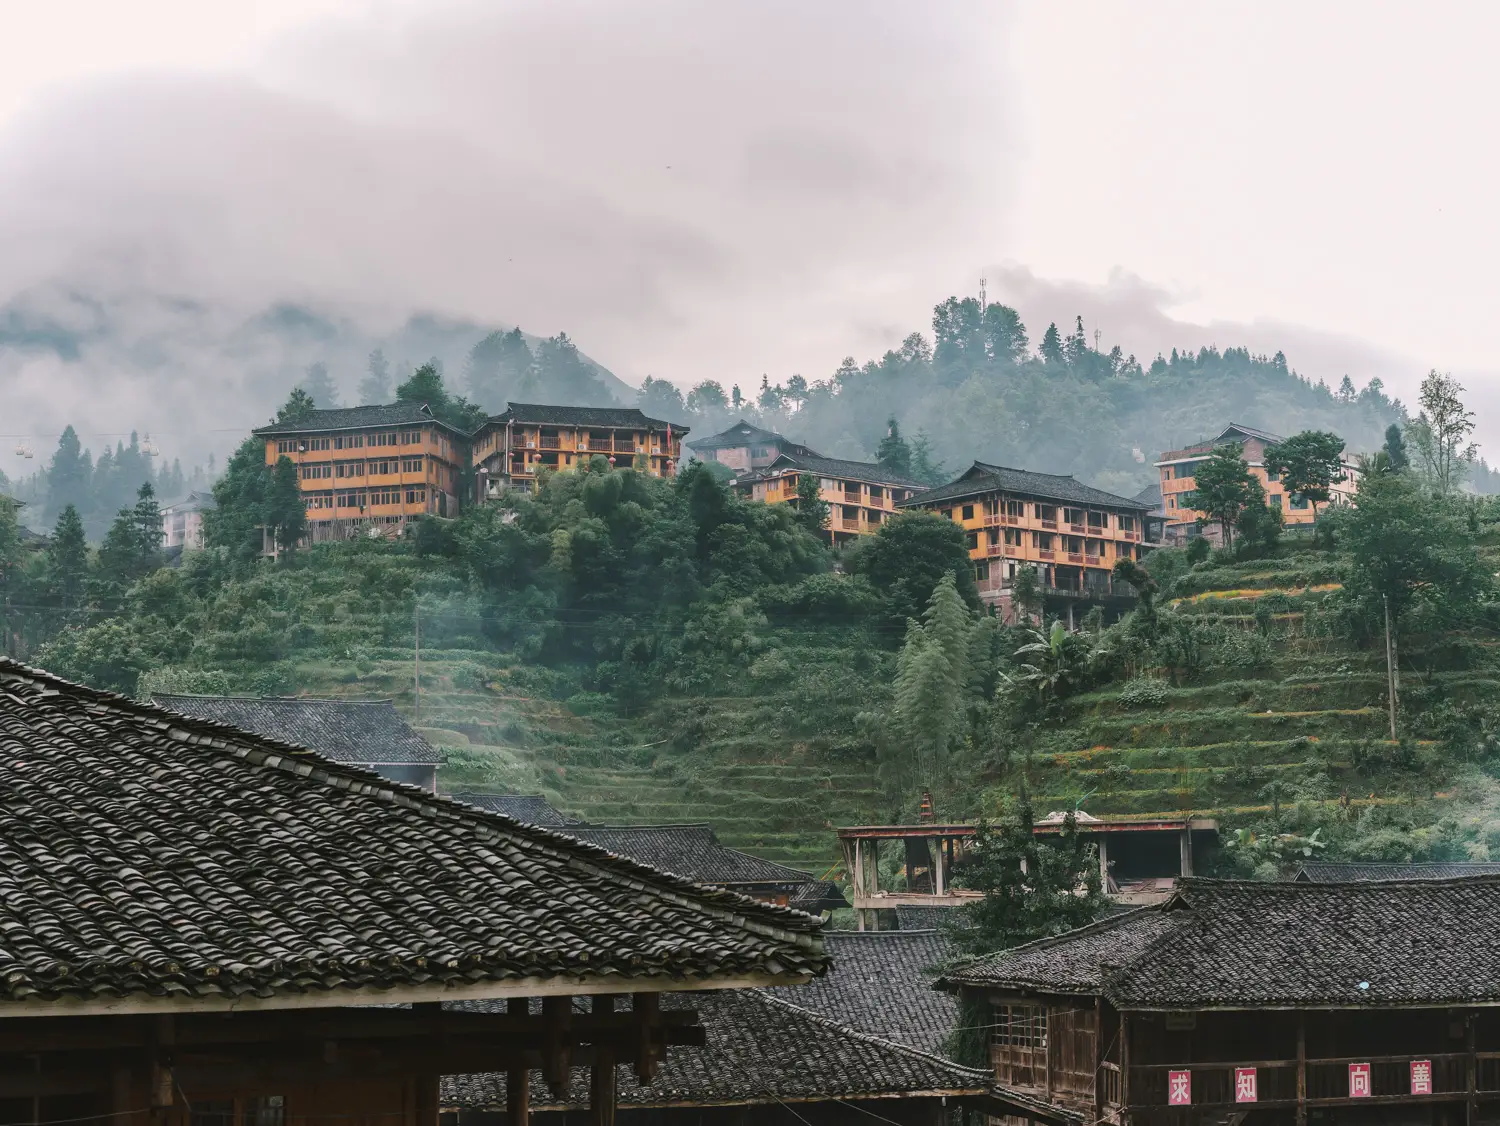 Dazhai Village near Guilin, China